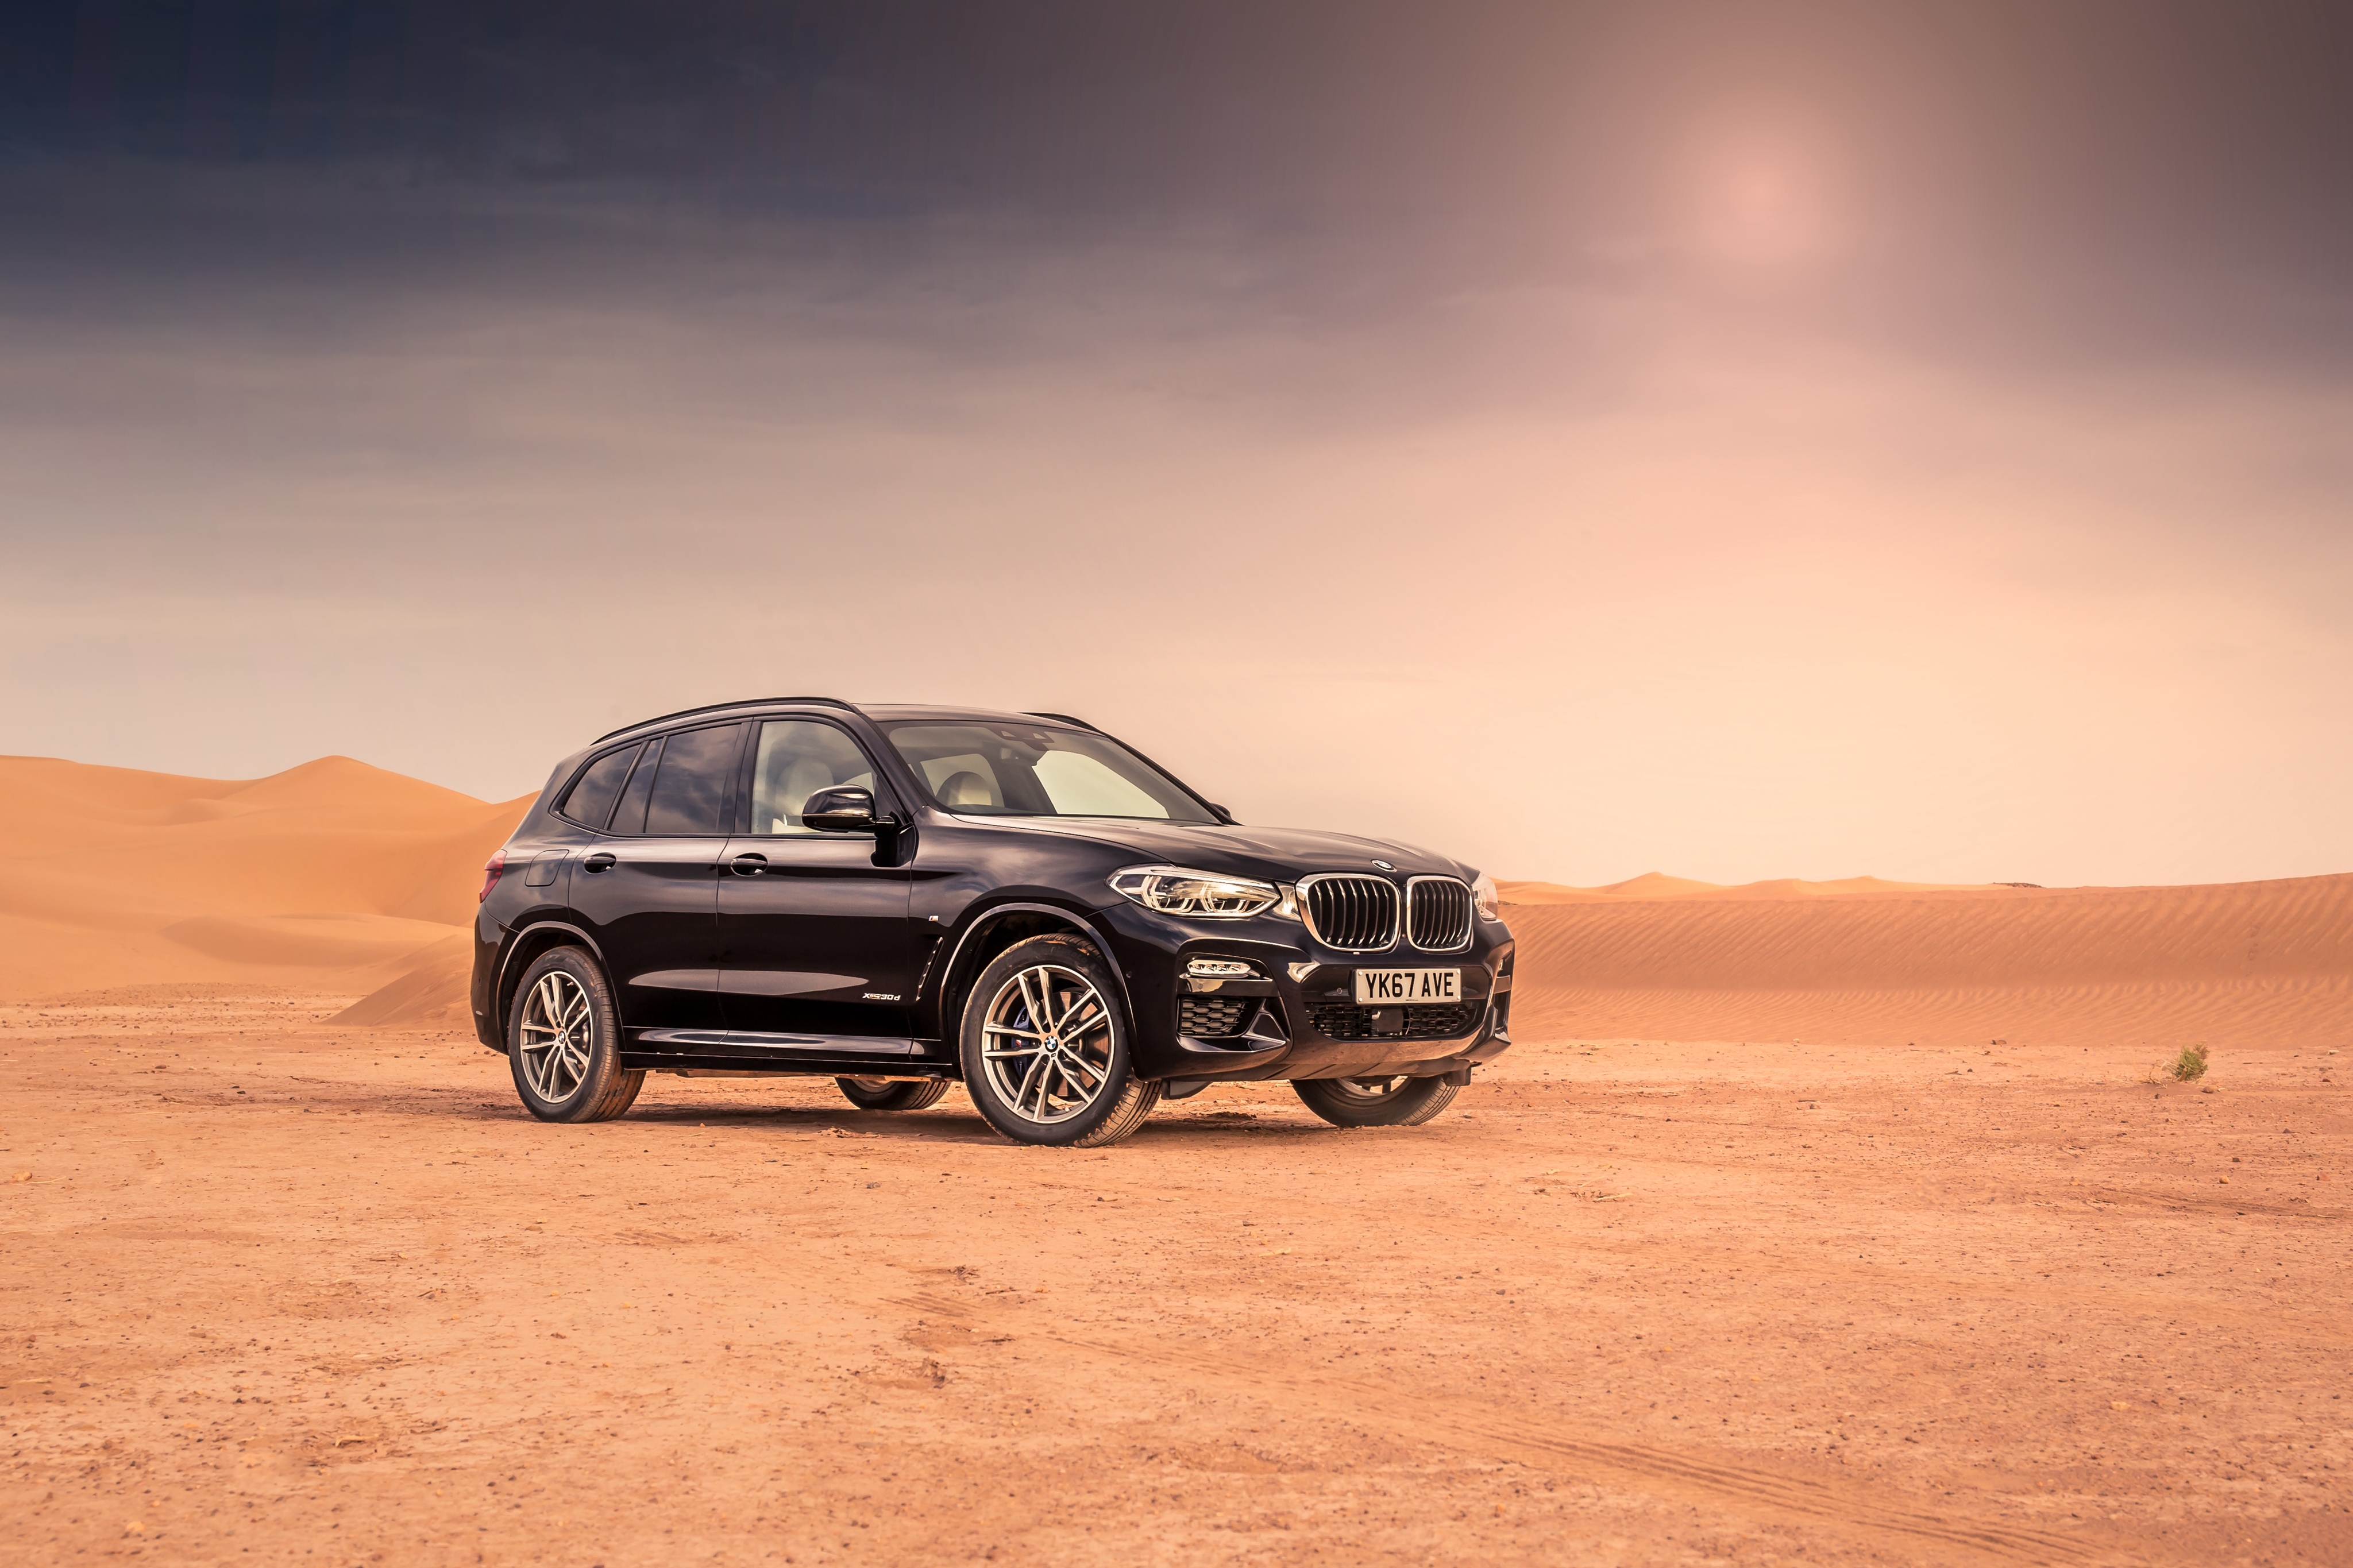 Free photo A black BMW X3 in the desert under the blazing sun.